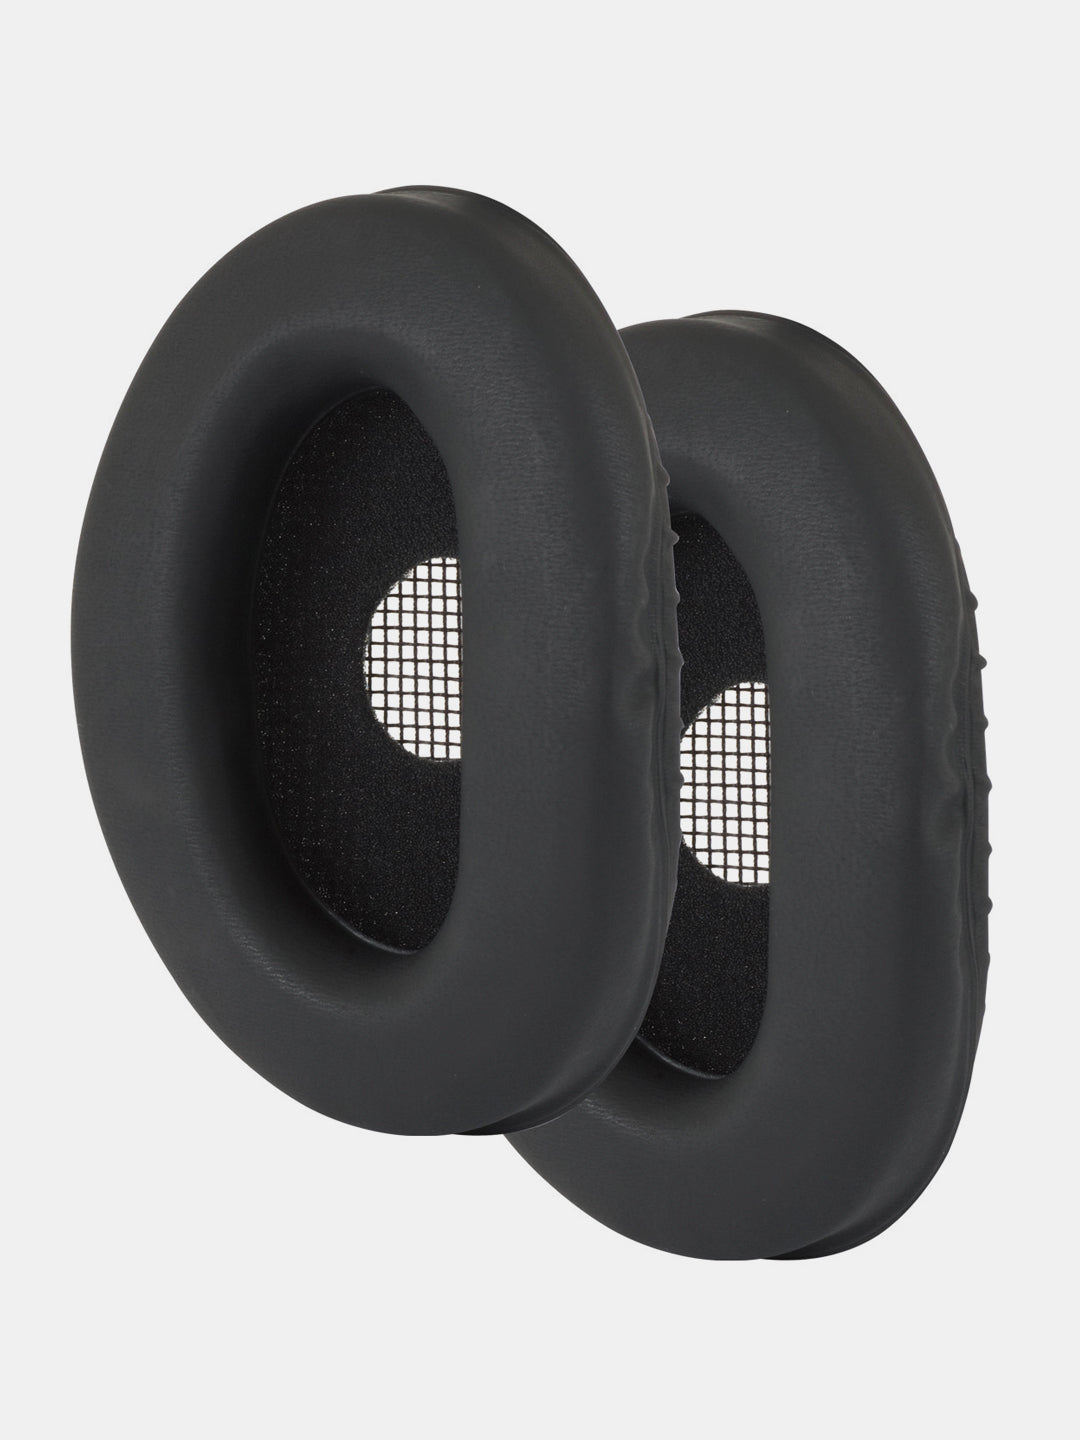 Premium Foam Ear Pads Cushions For KOSS Porta Pro PP KSC35 KSC75 KSC55  Headphones Blue Red